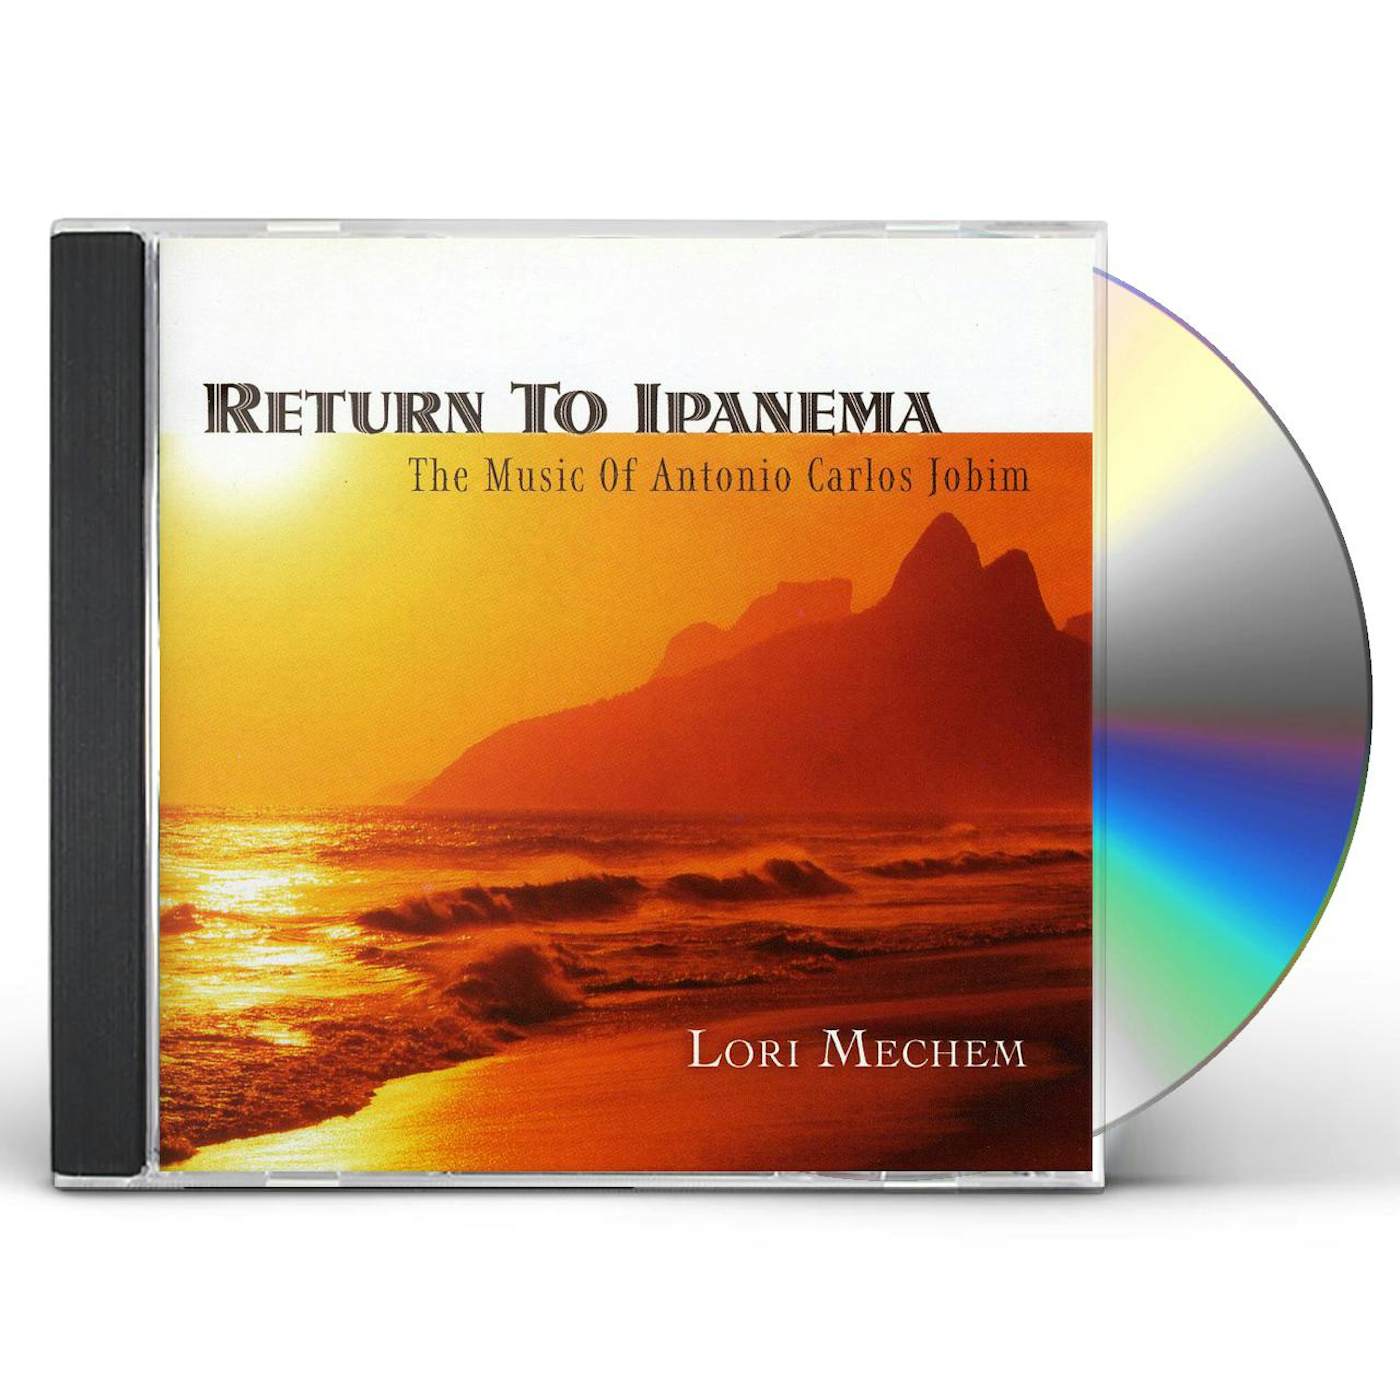 Lori Mechem RETURN TO IPANEMA CD